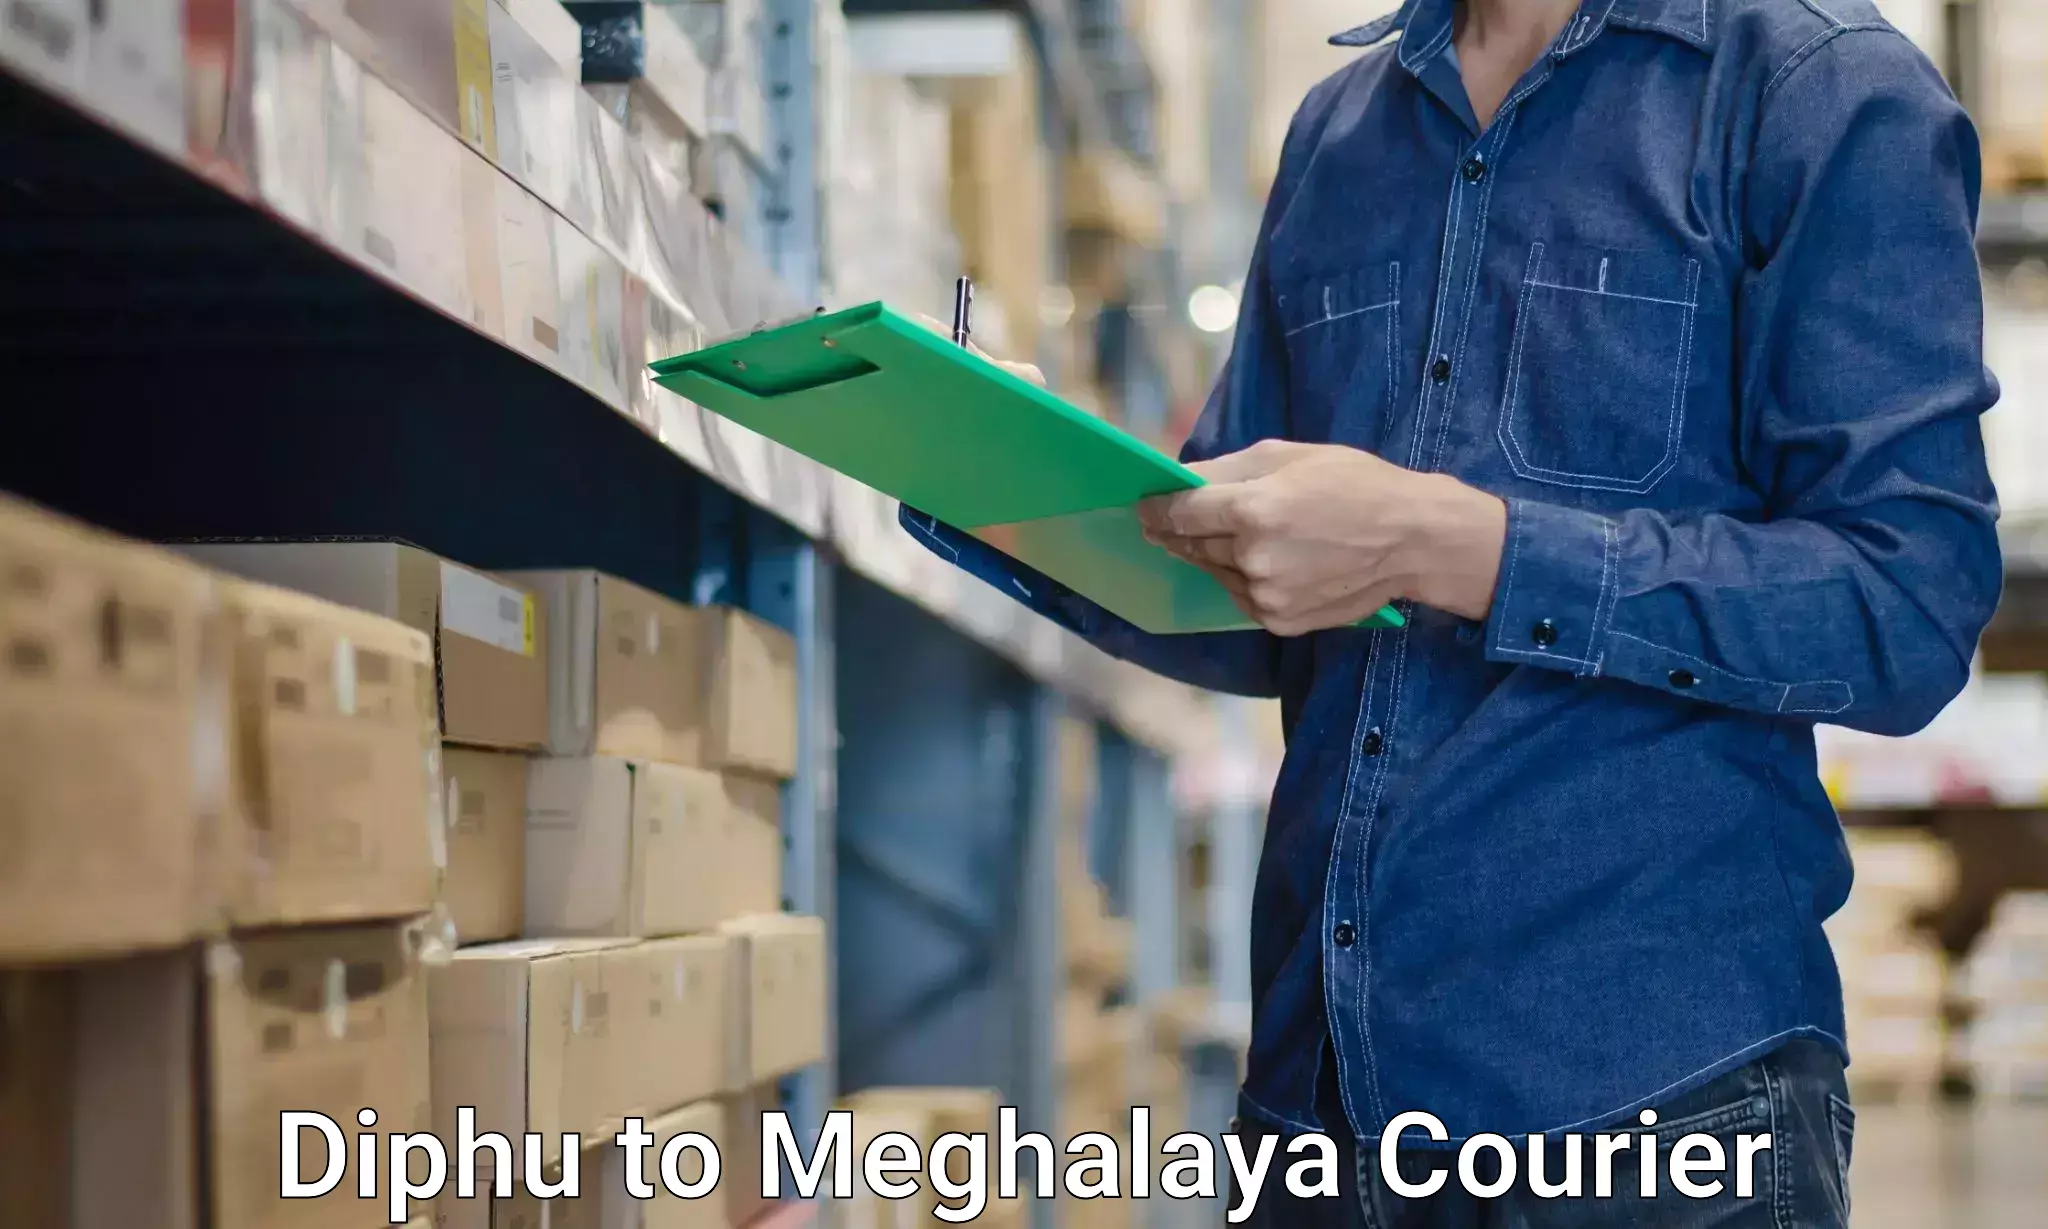 Specialized moving company Diphu to Meghalaya